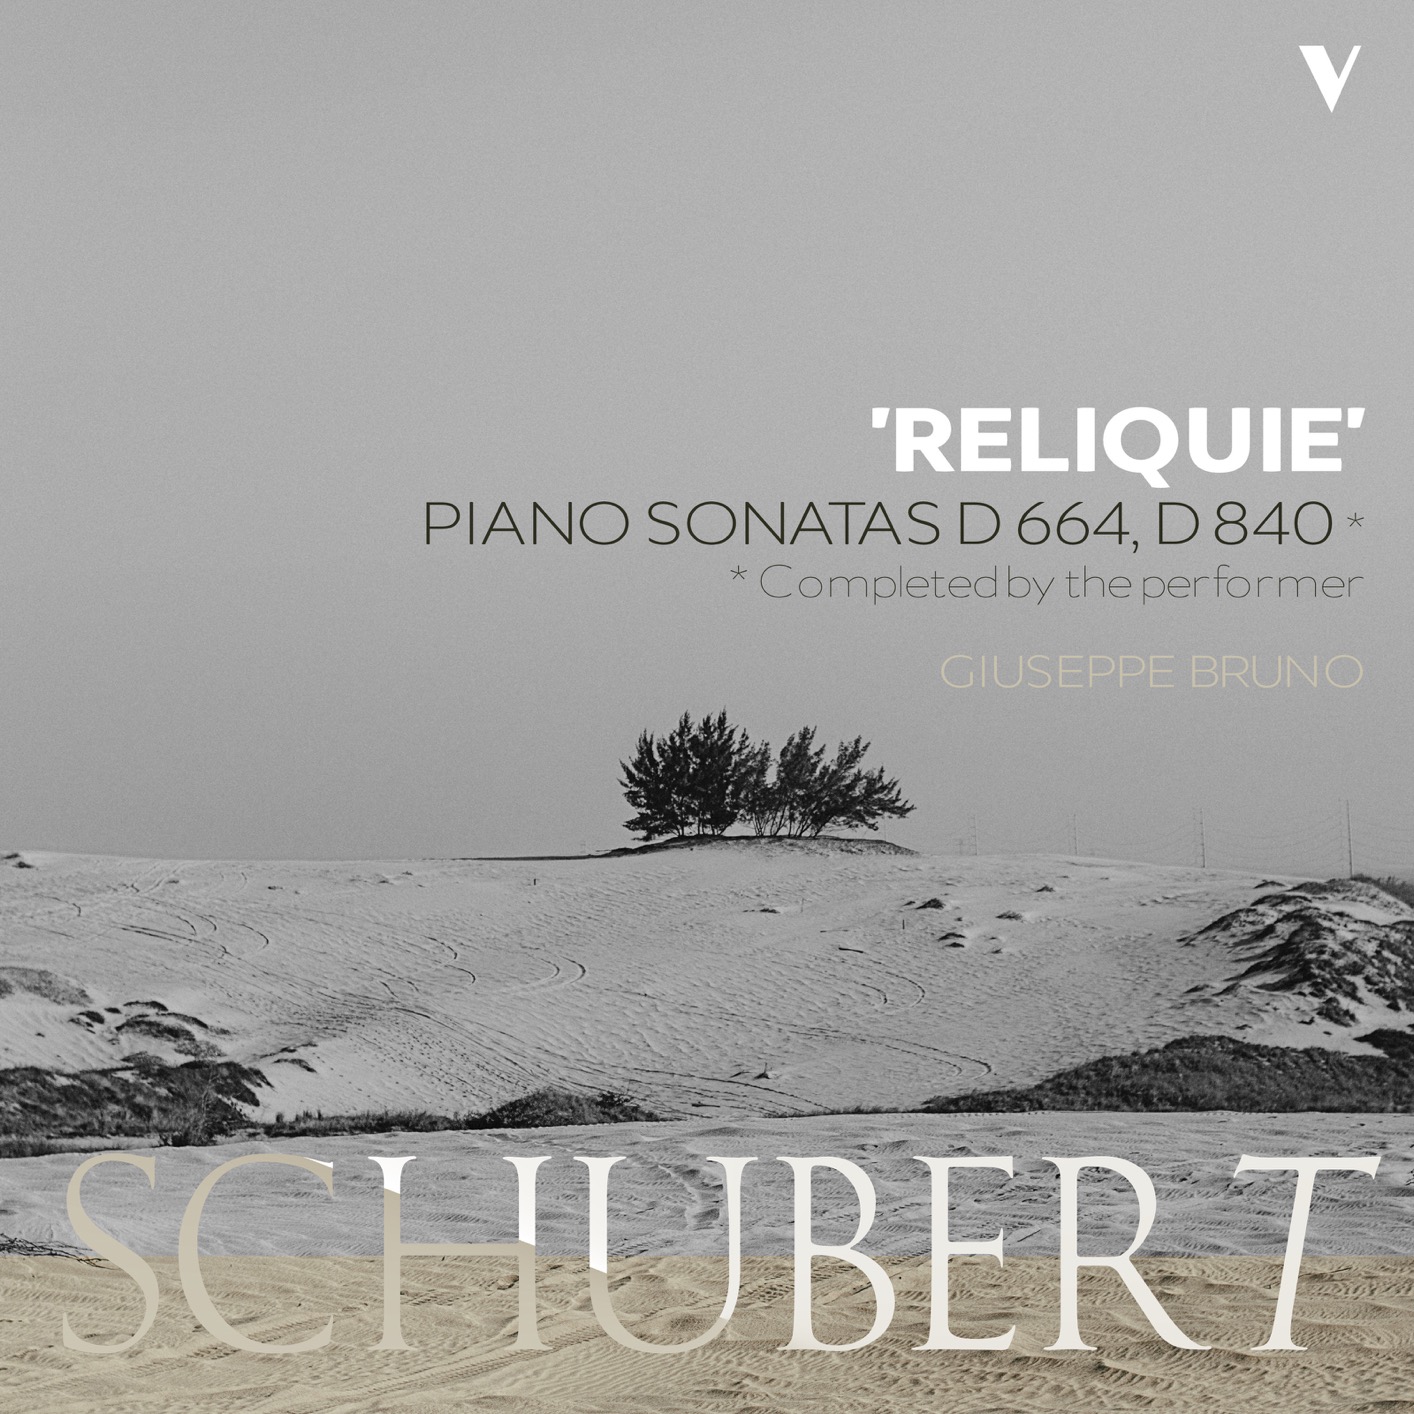 Giuseppe Bruno - Schubert: Piano Sonata No. 13, D. 664 & No. 15, D. 840 "Reliquie" (2019) [FLAC 24bit/88,2kHz]